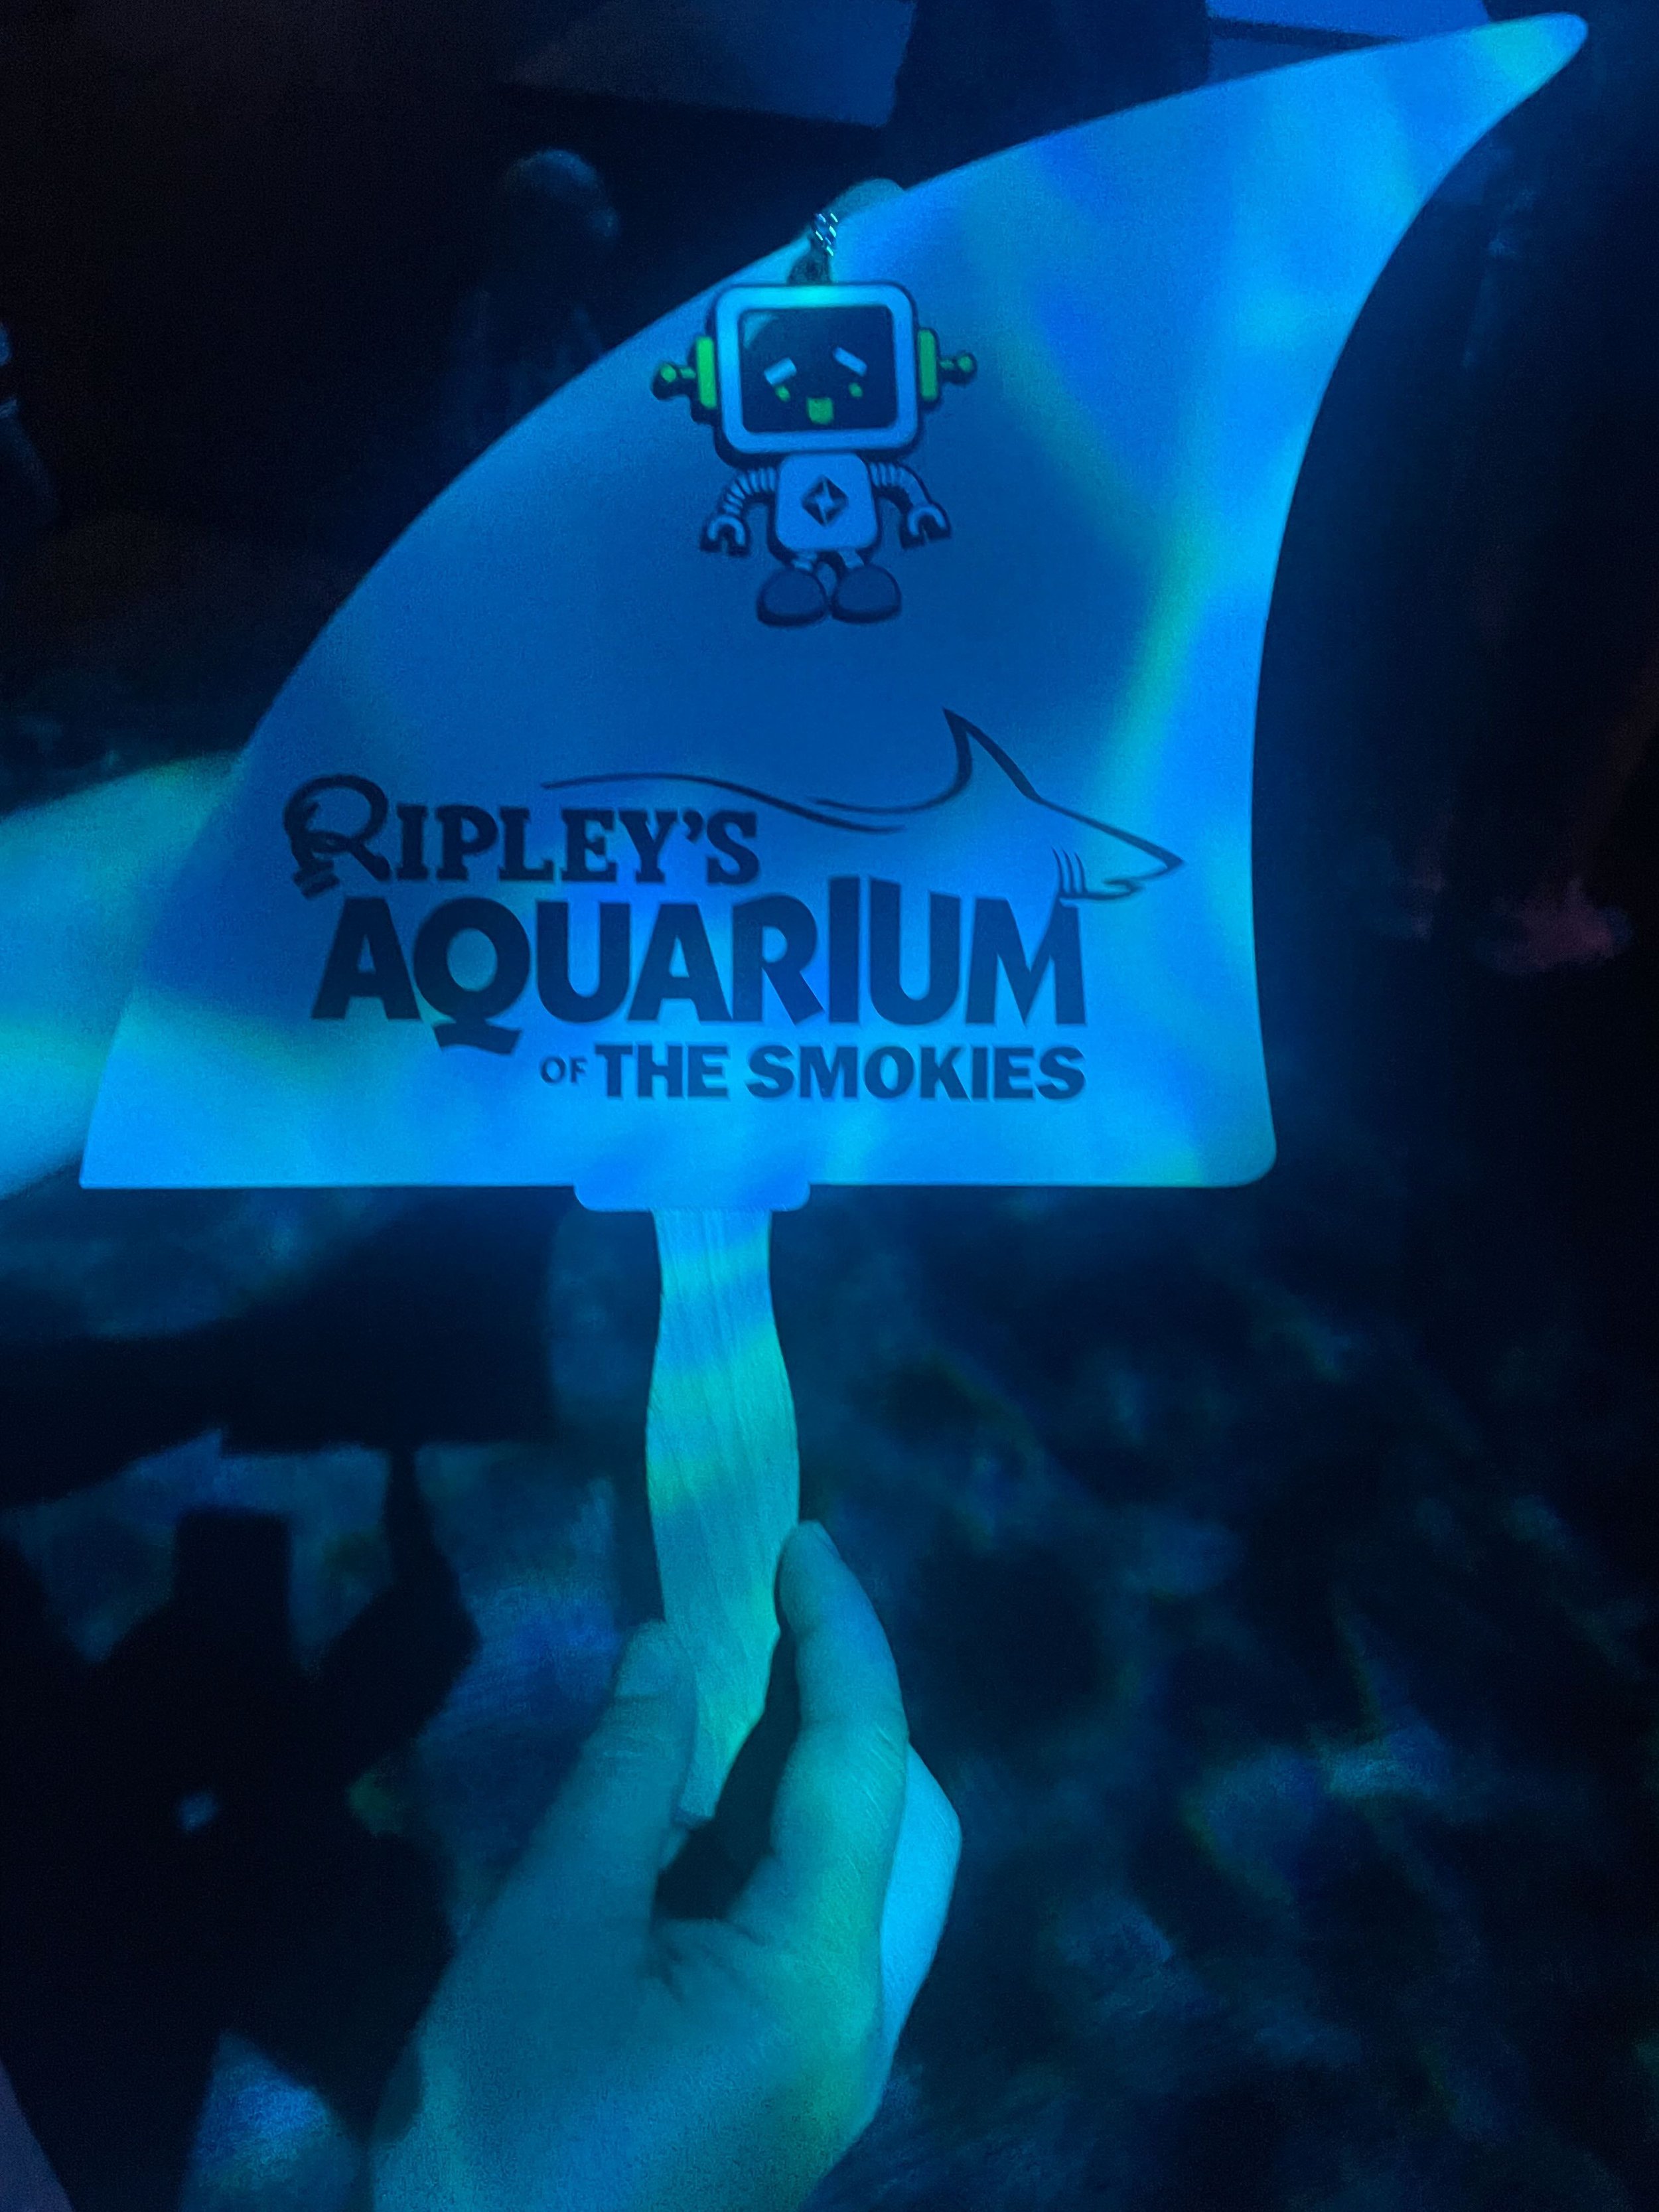 RoBert visited Aquarium of the Smokies in Gatlinburg, TN